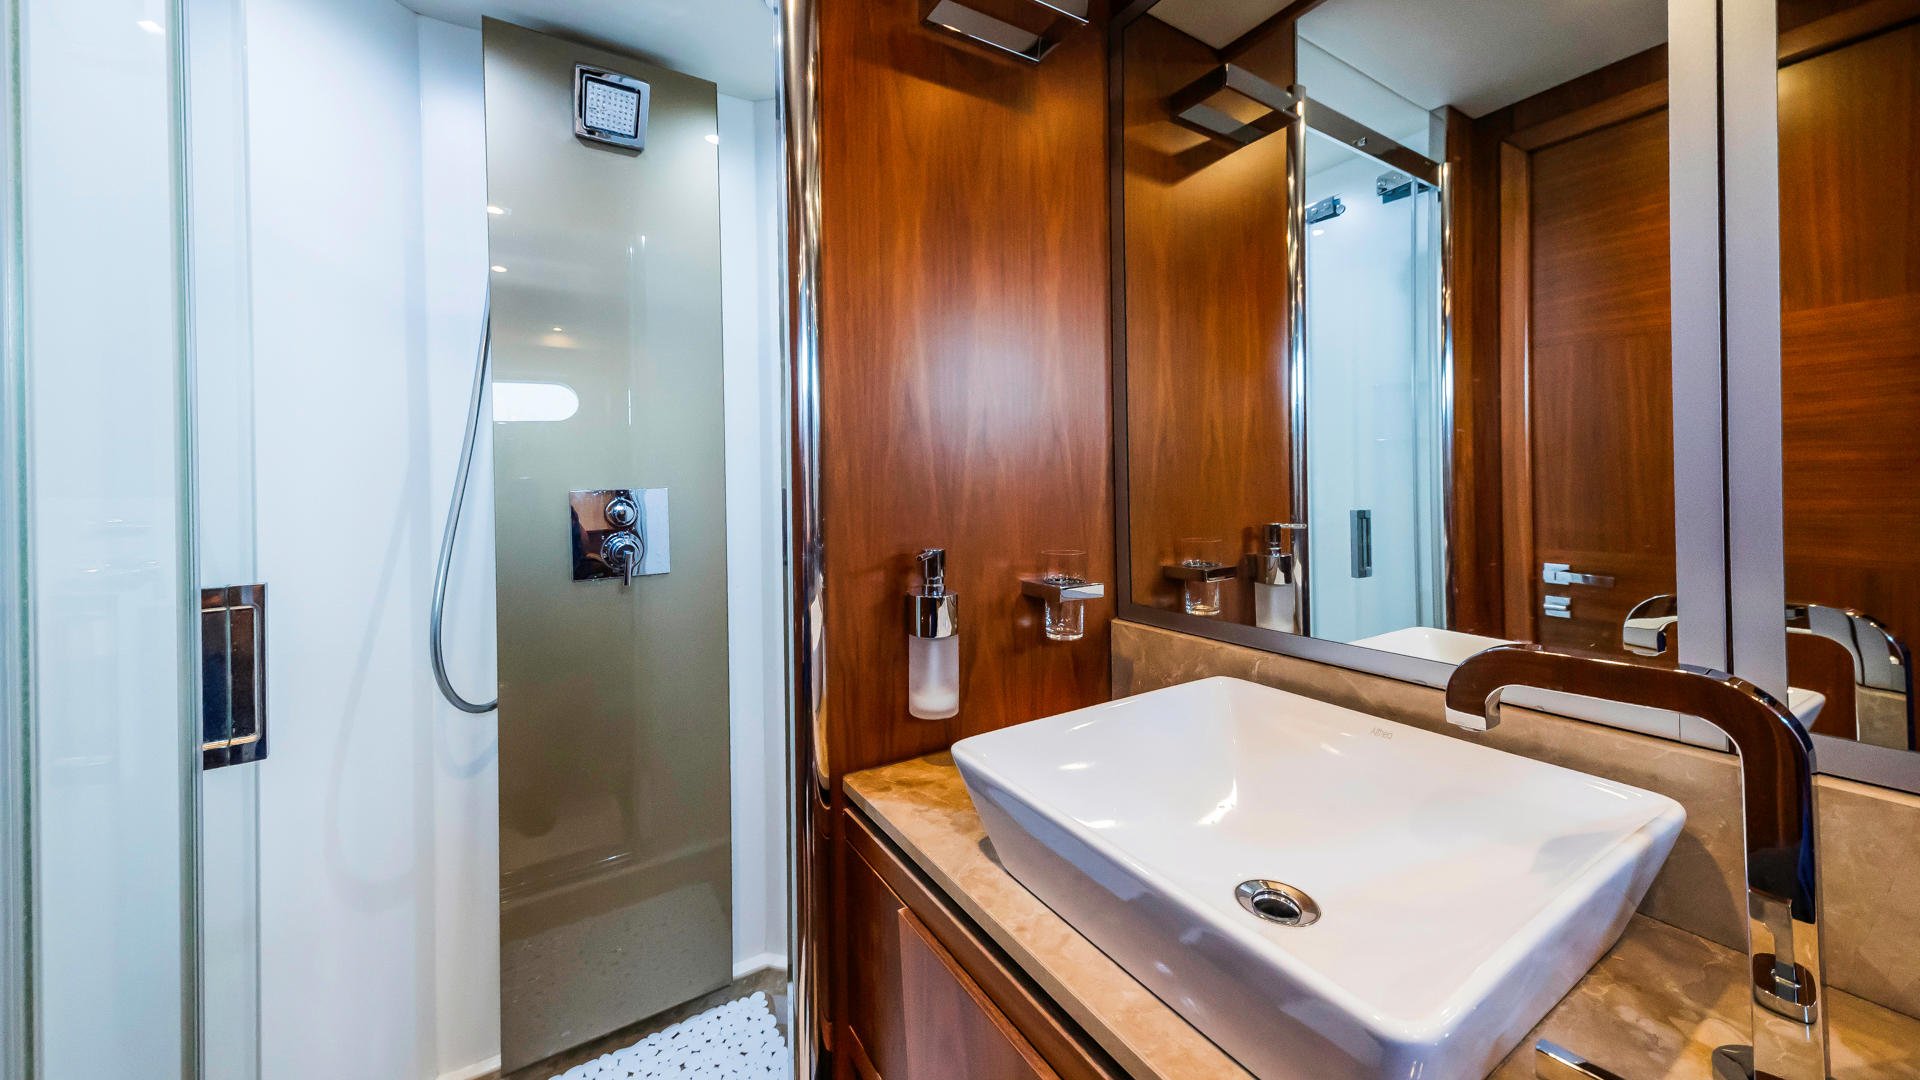 33-The-best-way-Twin-bathroom-shower-view.JPG